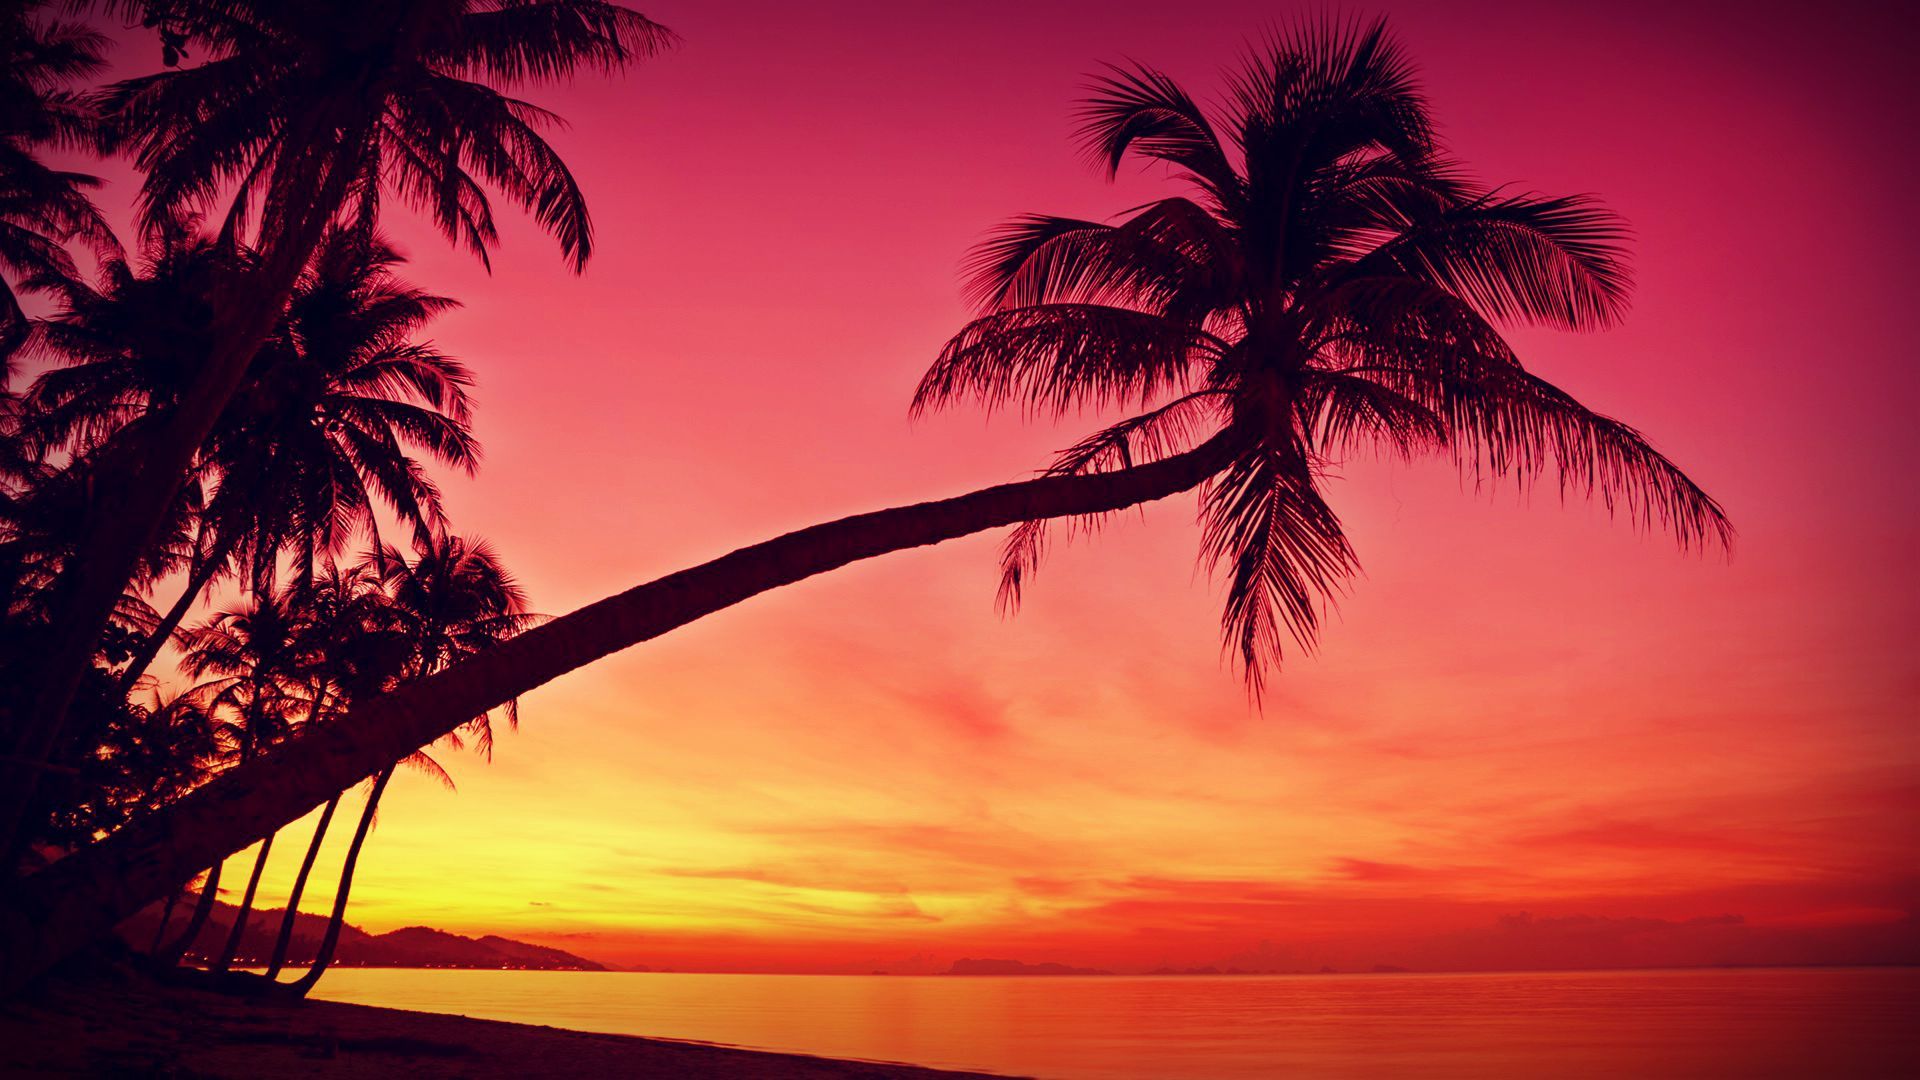 Beach Sunset Wallpaper HD For Desktop On Flip